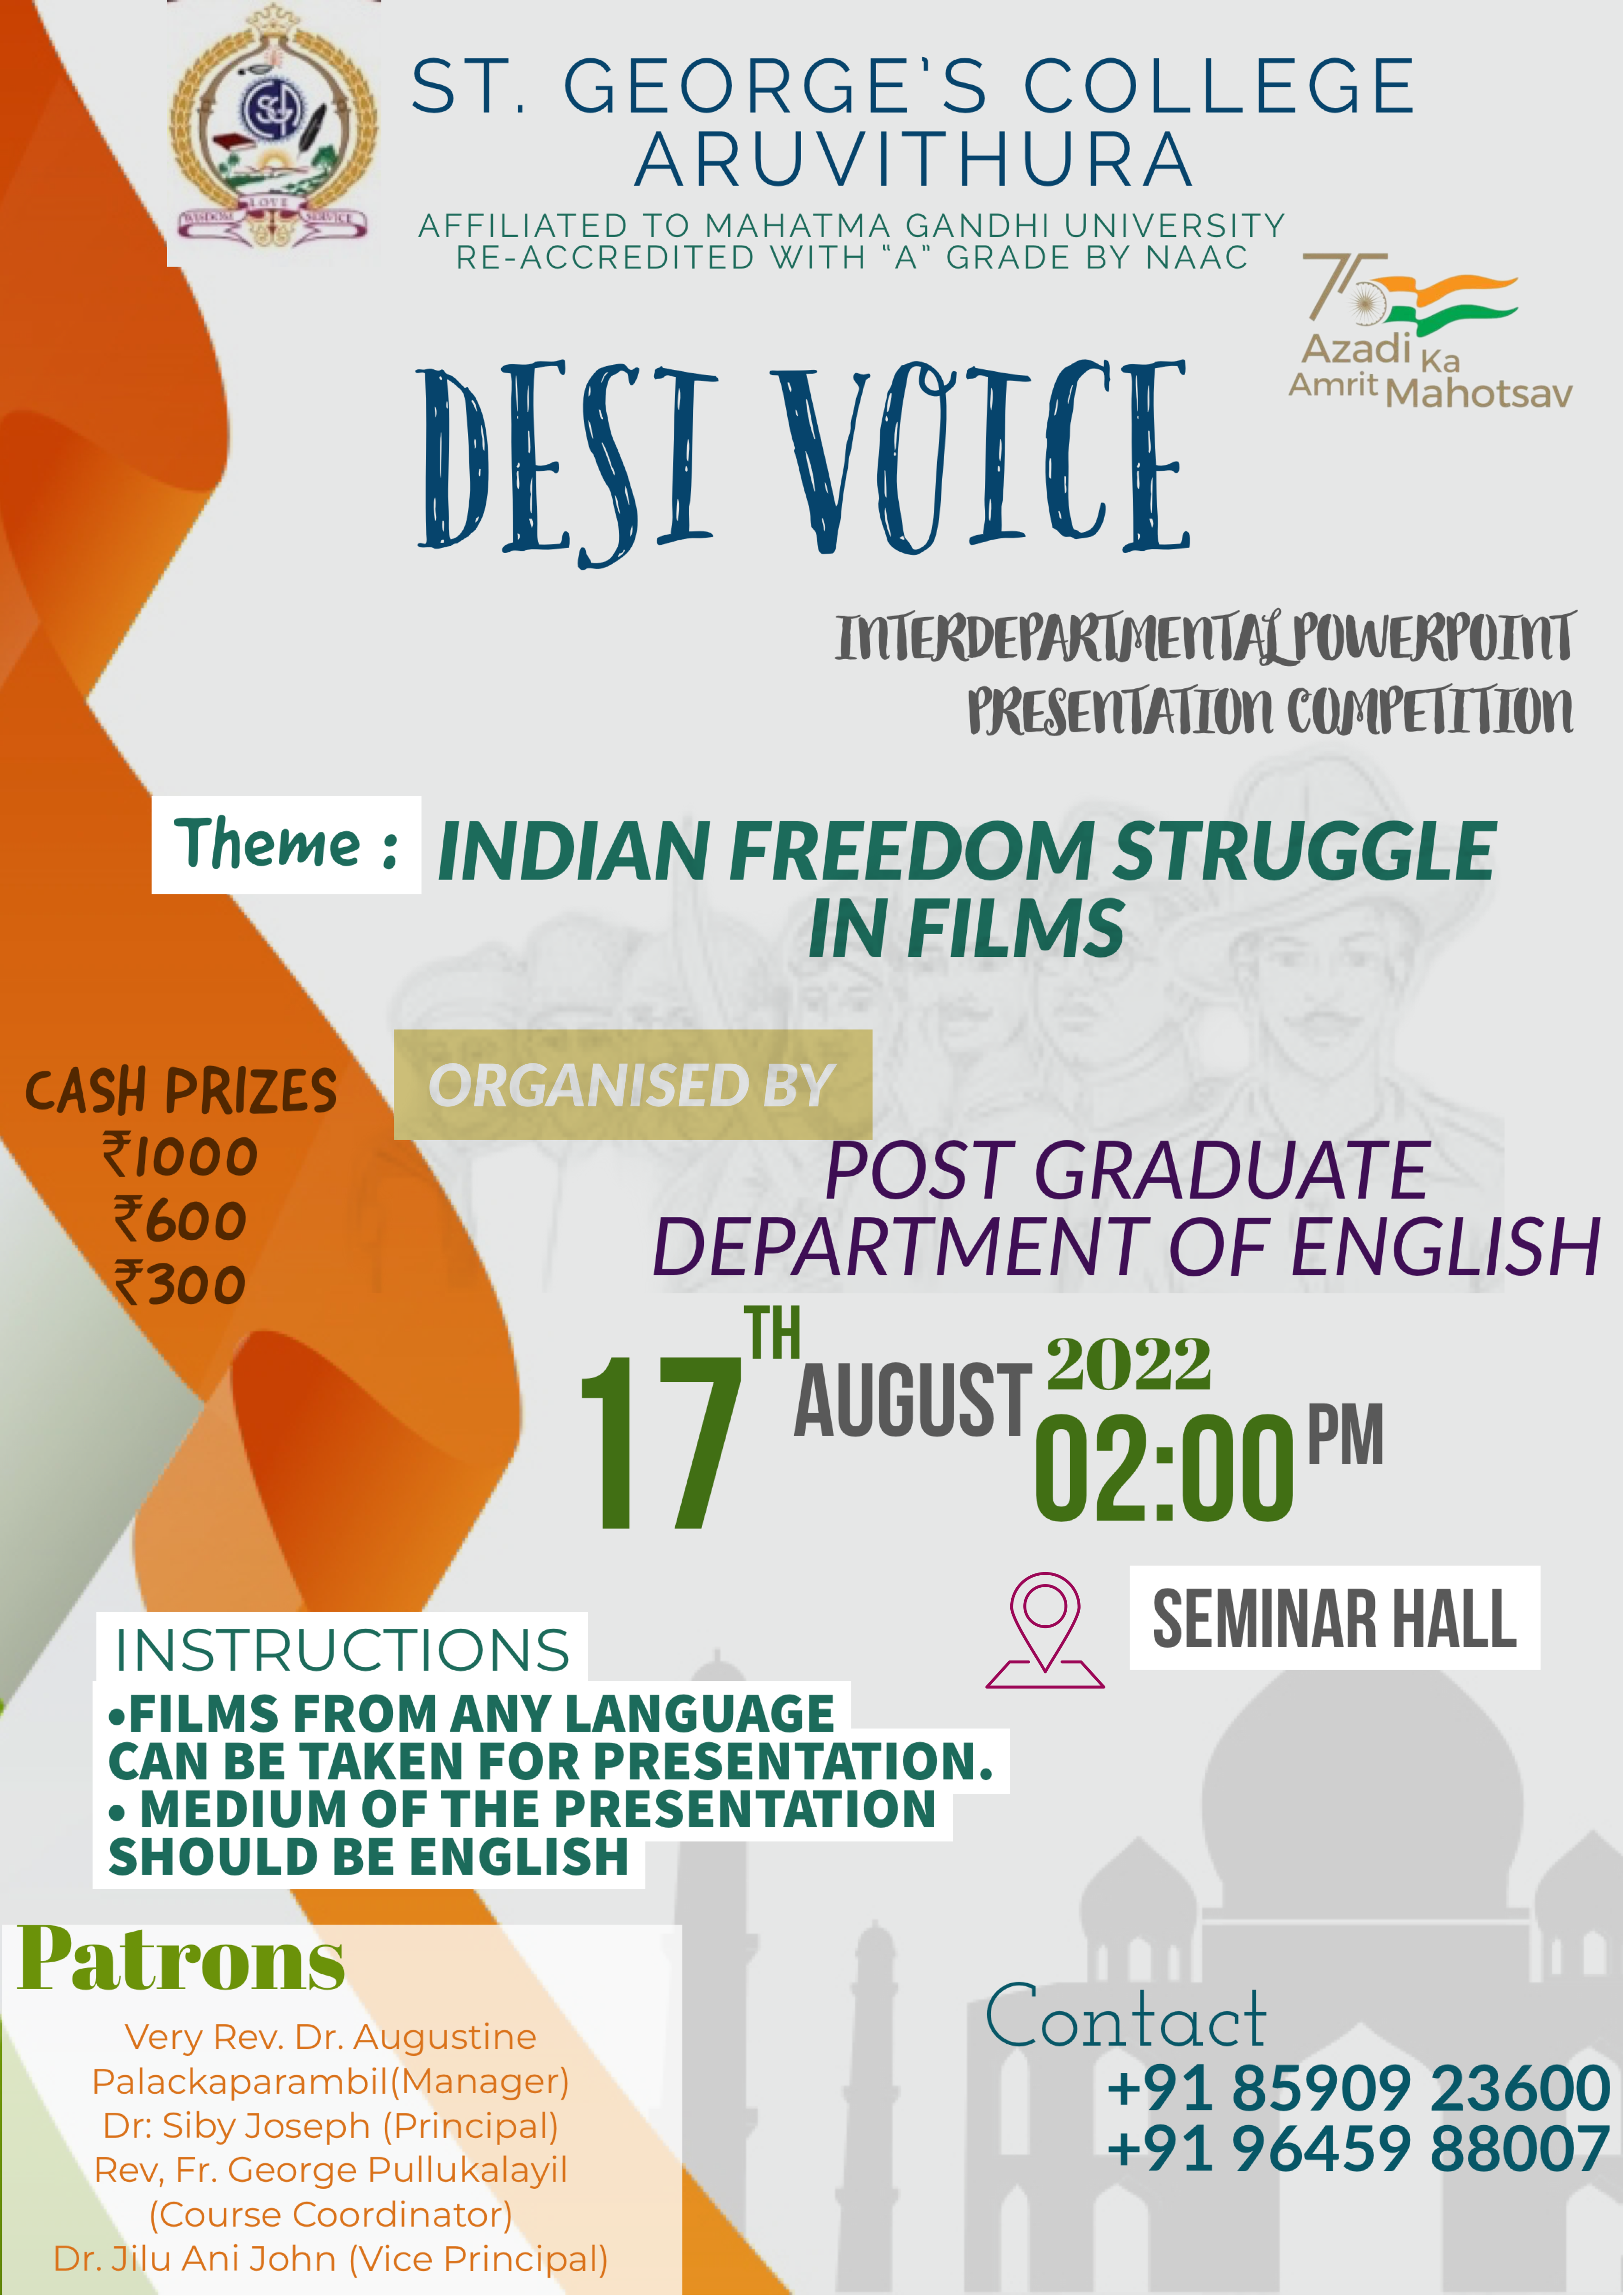 Desi Voice - PowerPoint Presentation Competition  